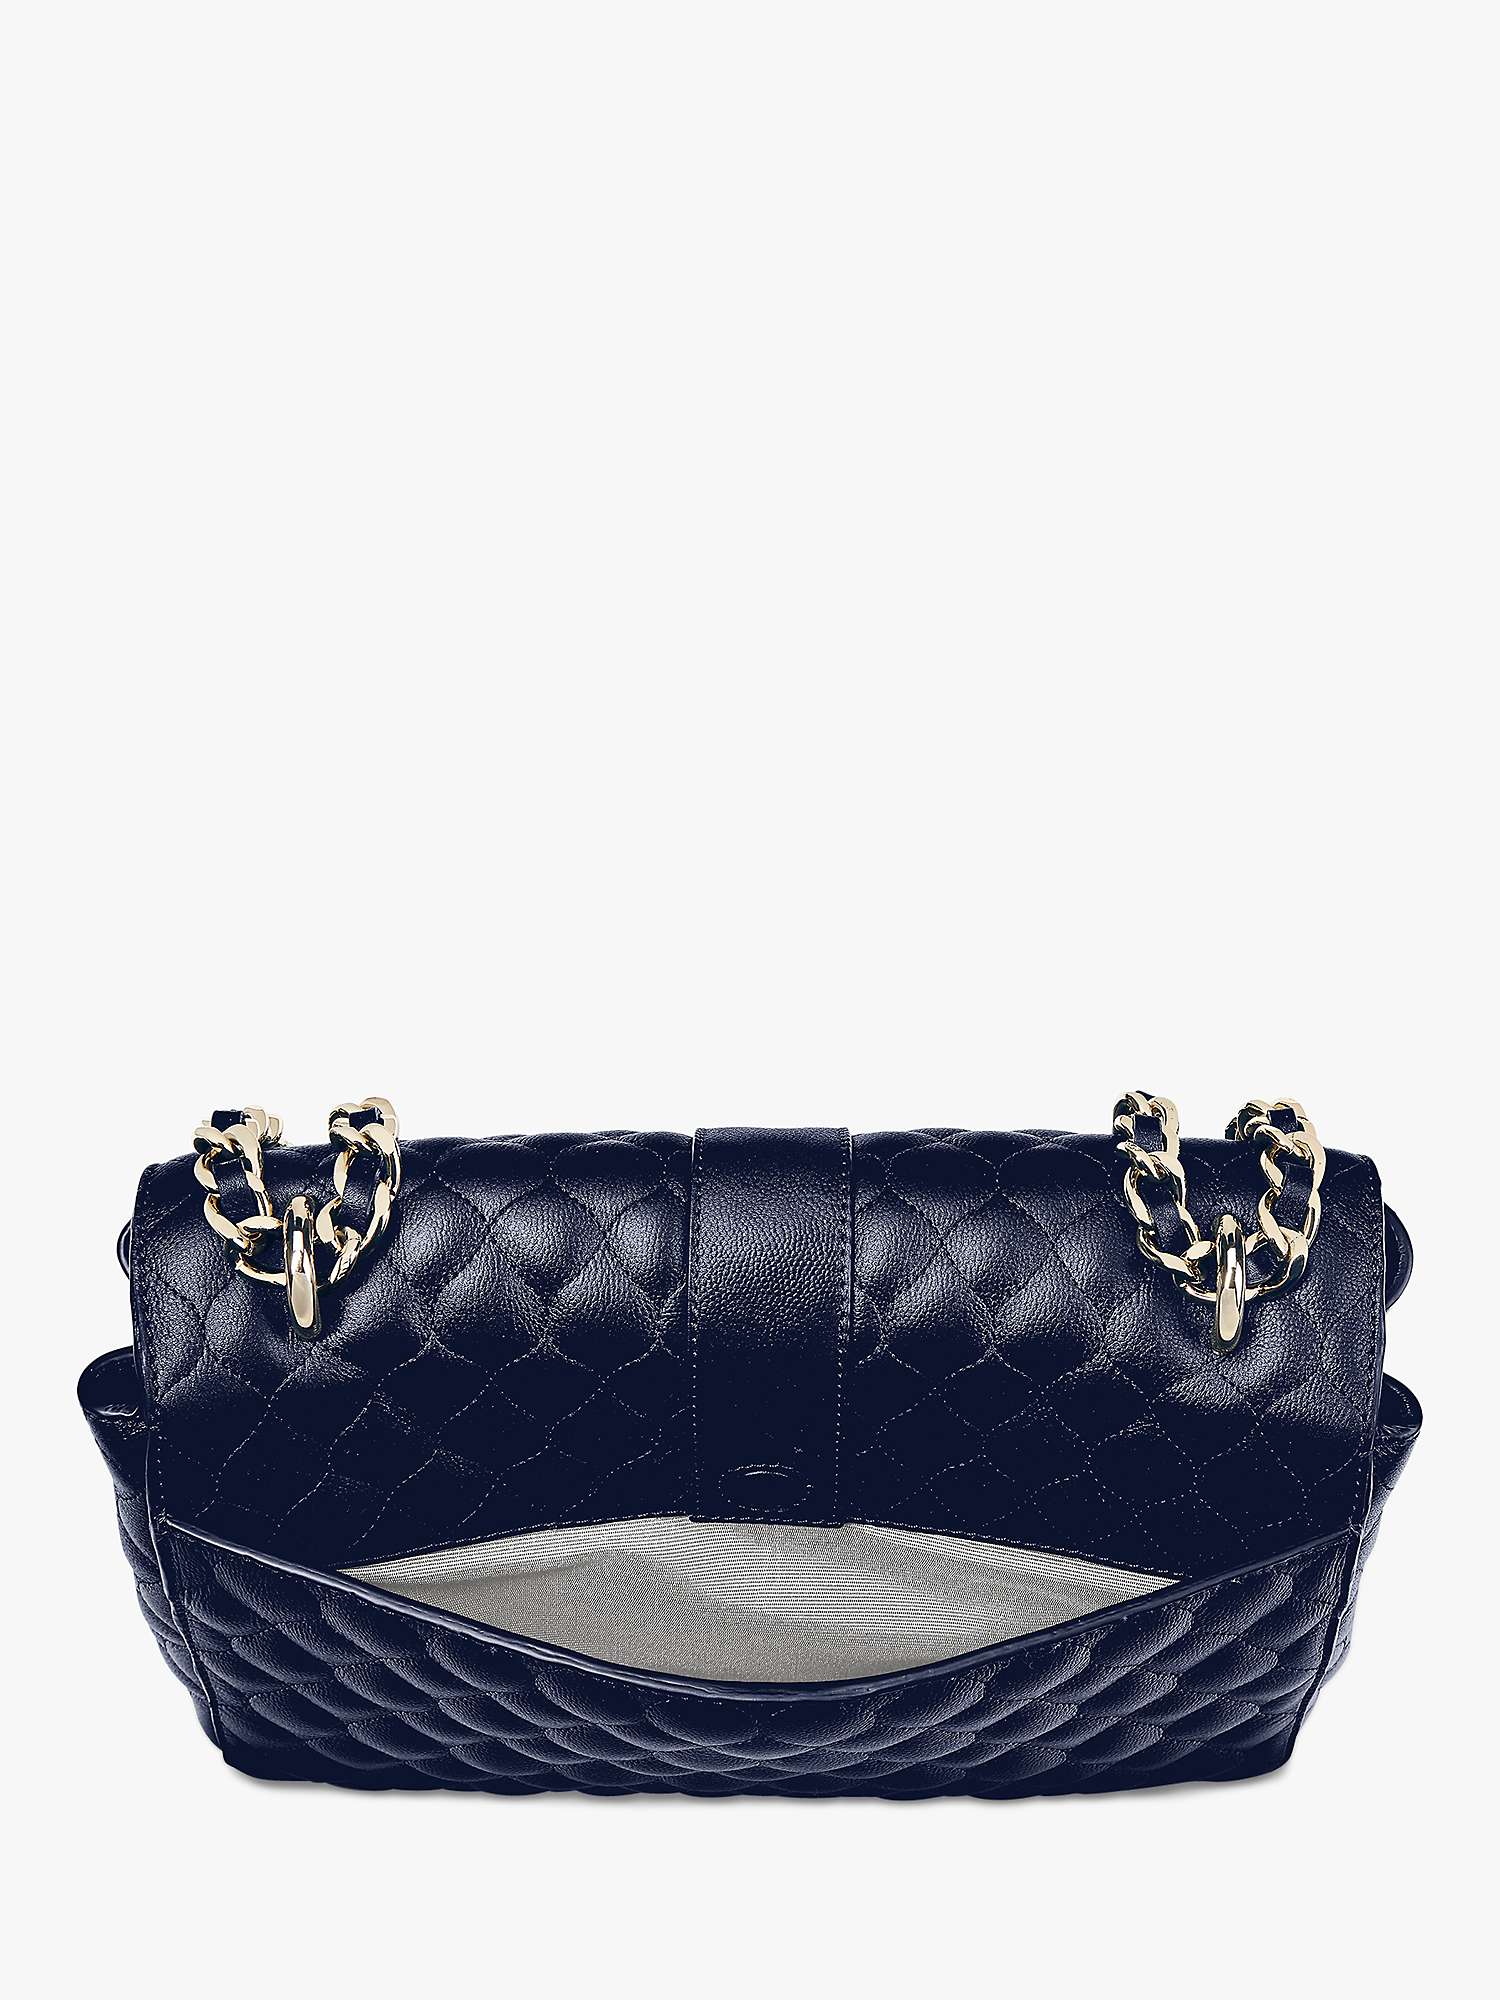 Buy Aspinal of London Lottie Large Quilted Pebble Leather Shoulder Bag Online at johnlewis.com